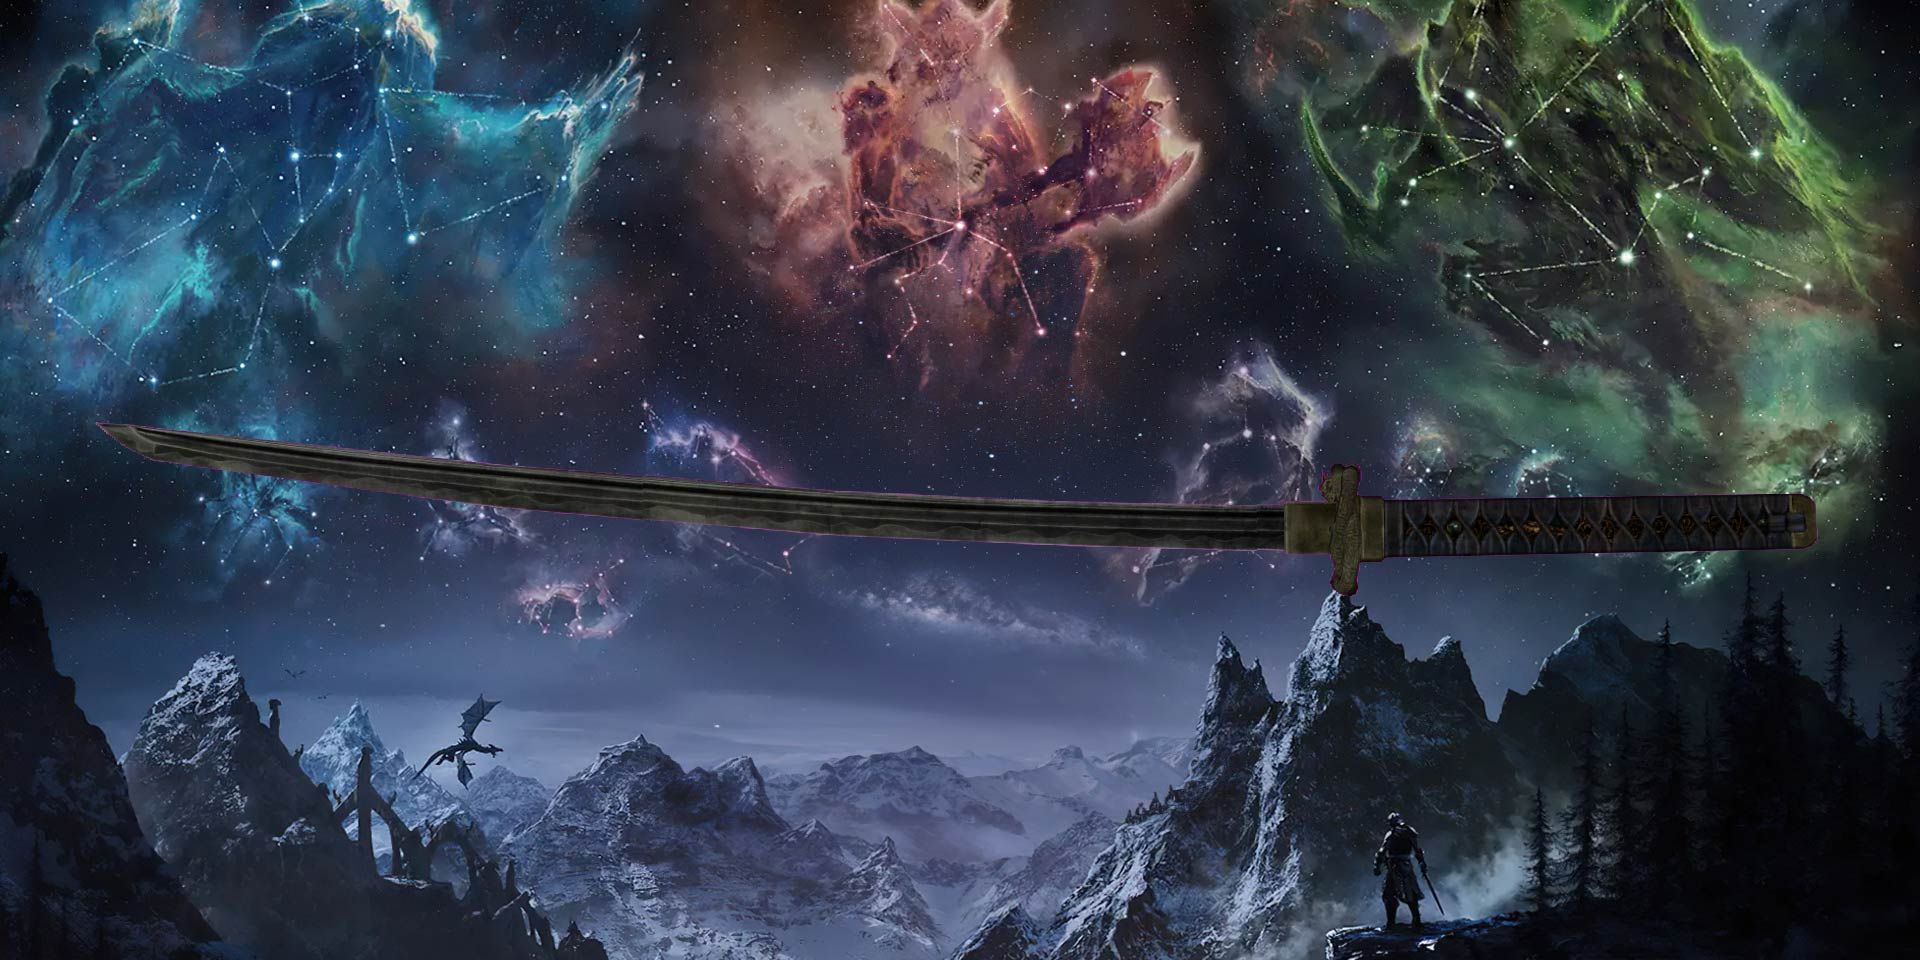 Dragonbane among mountains and Elder Scrolls star signs.